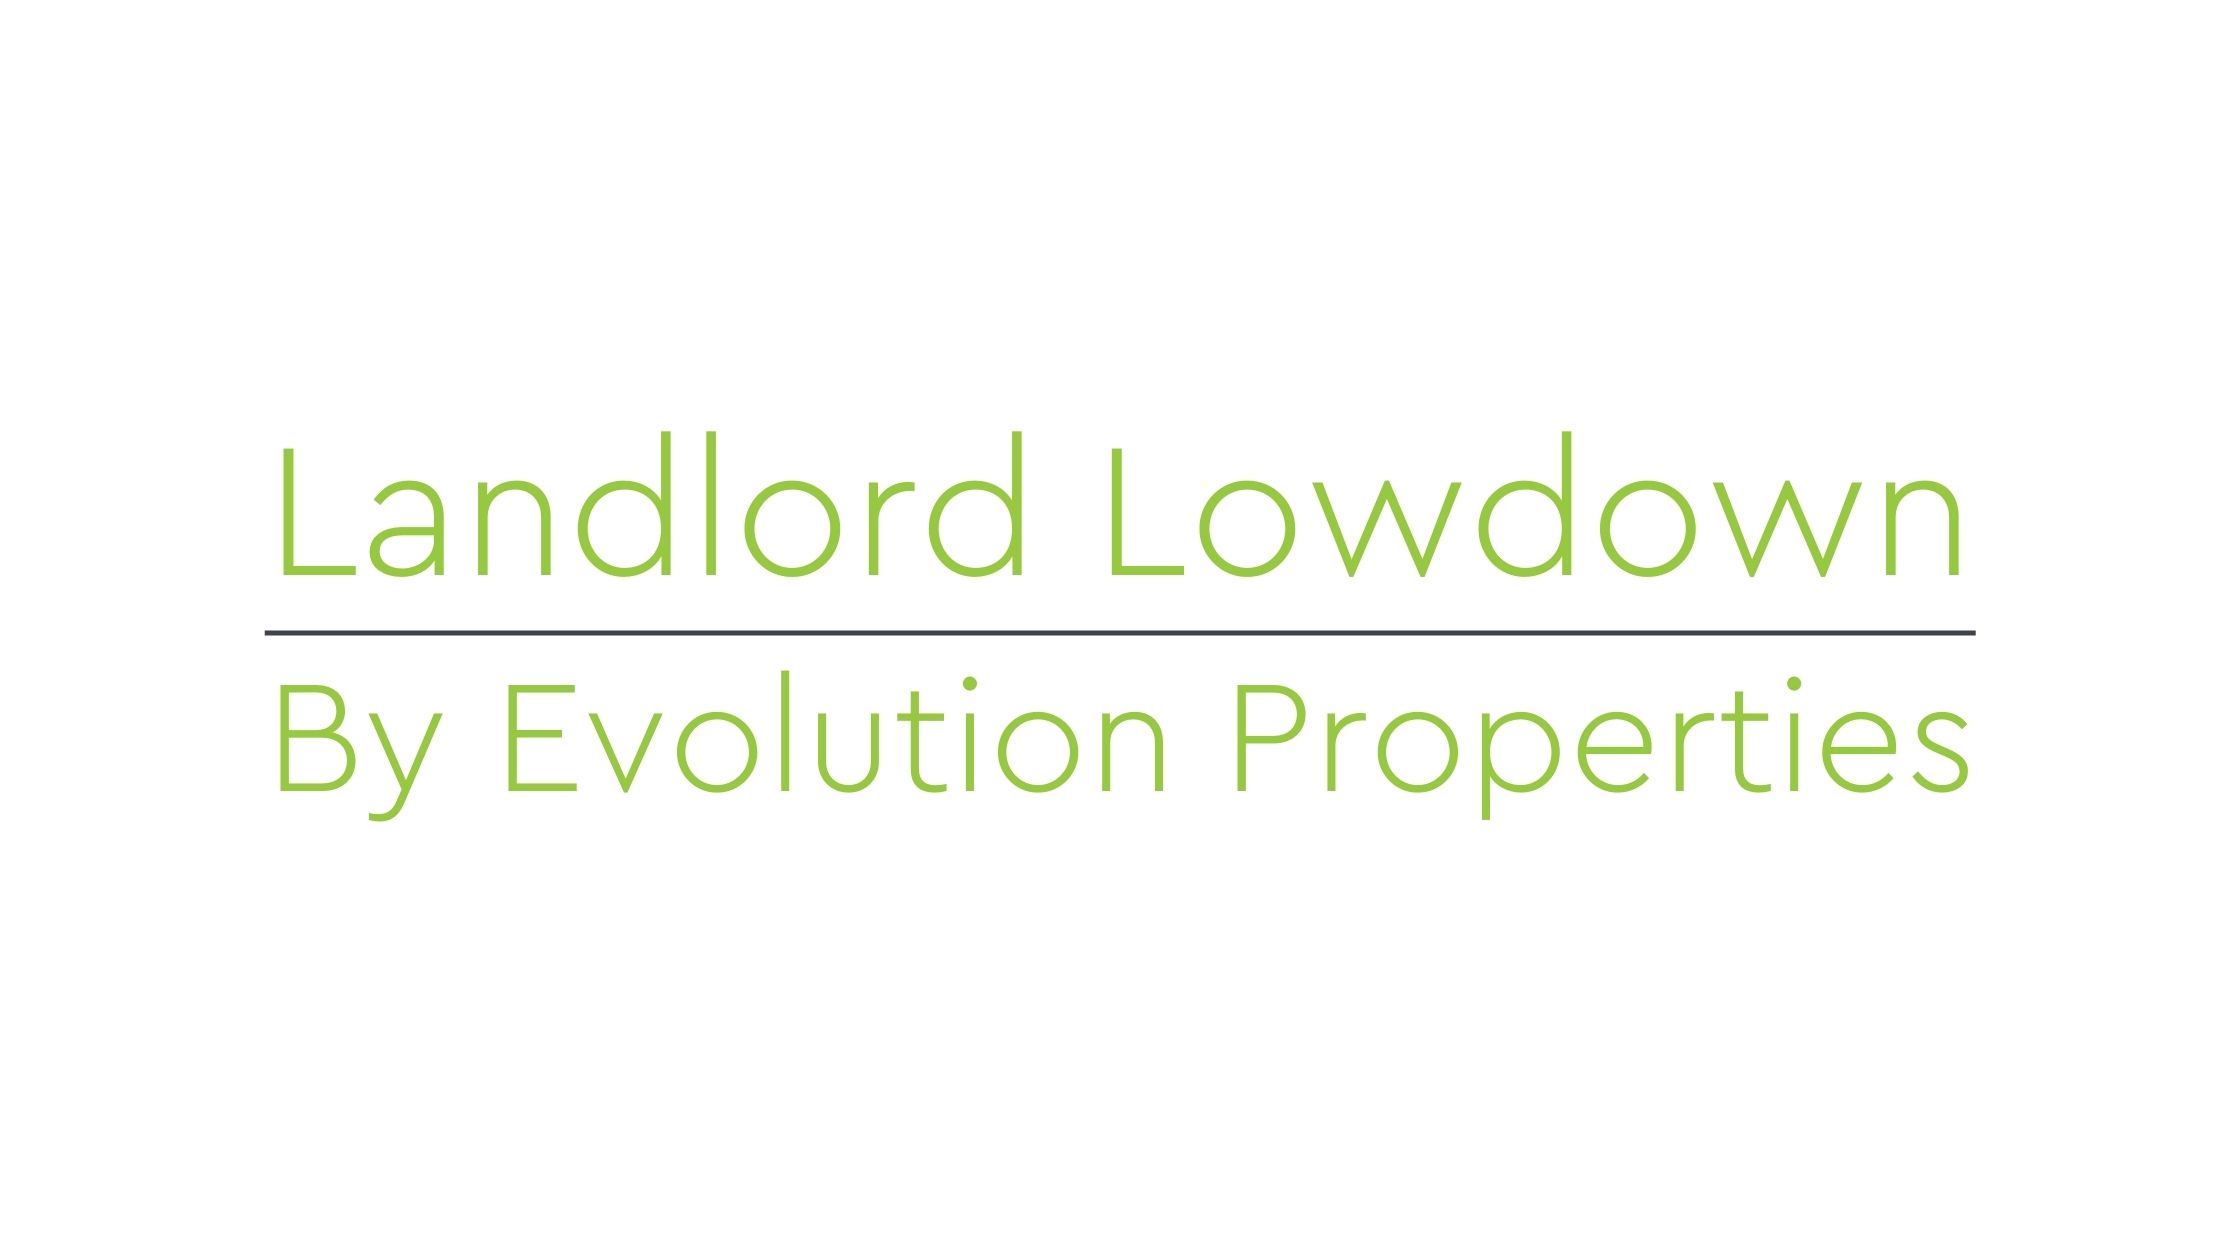 Landlord Lowdown - Bank of England.